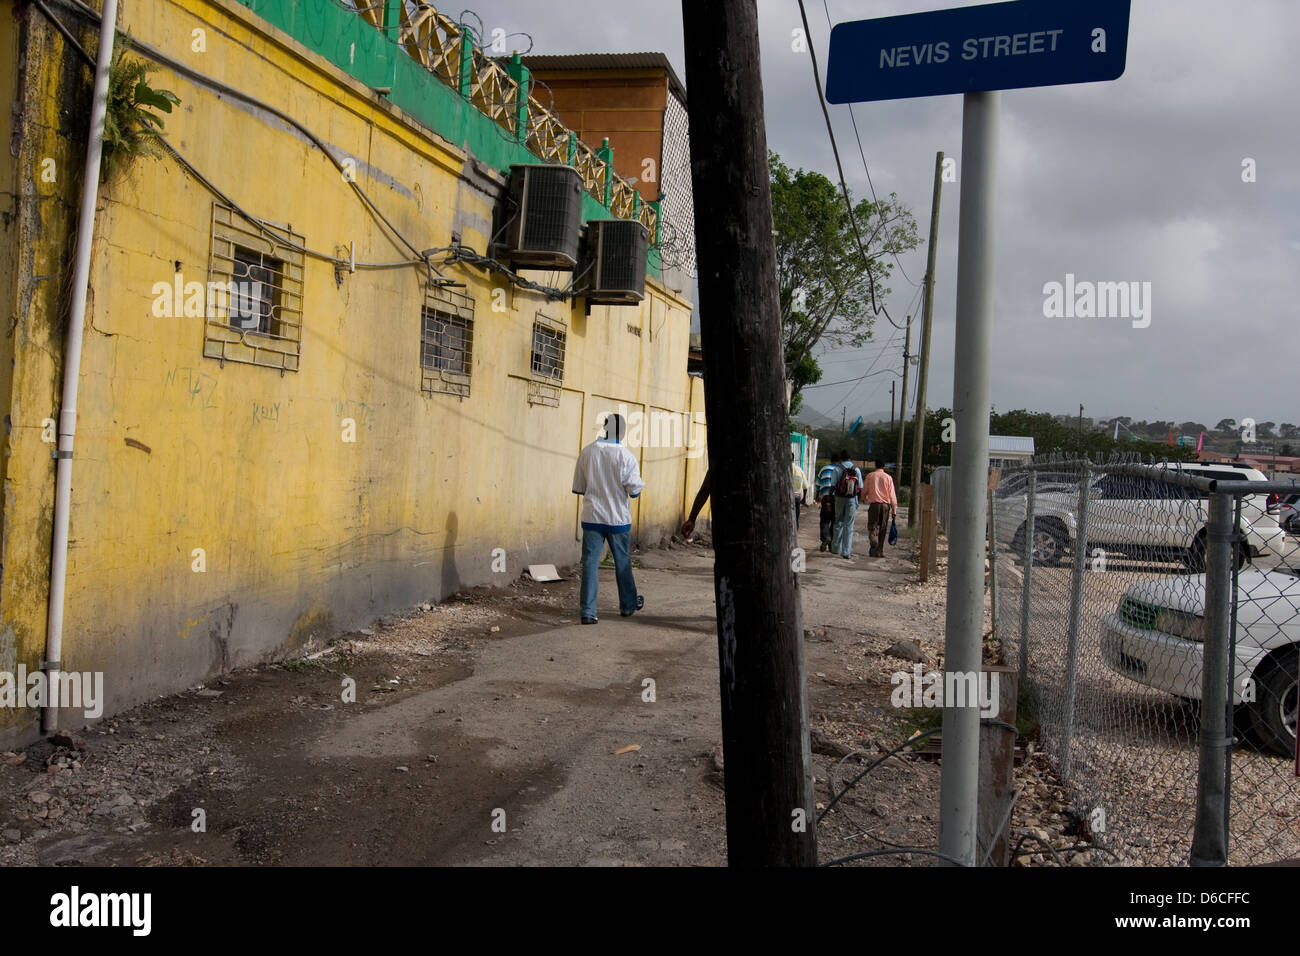 People walk in an alley off Nevis Street in Antigua Stock Photo